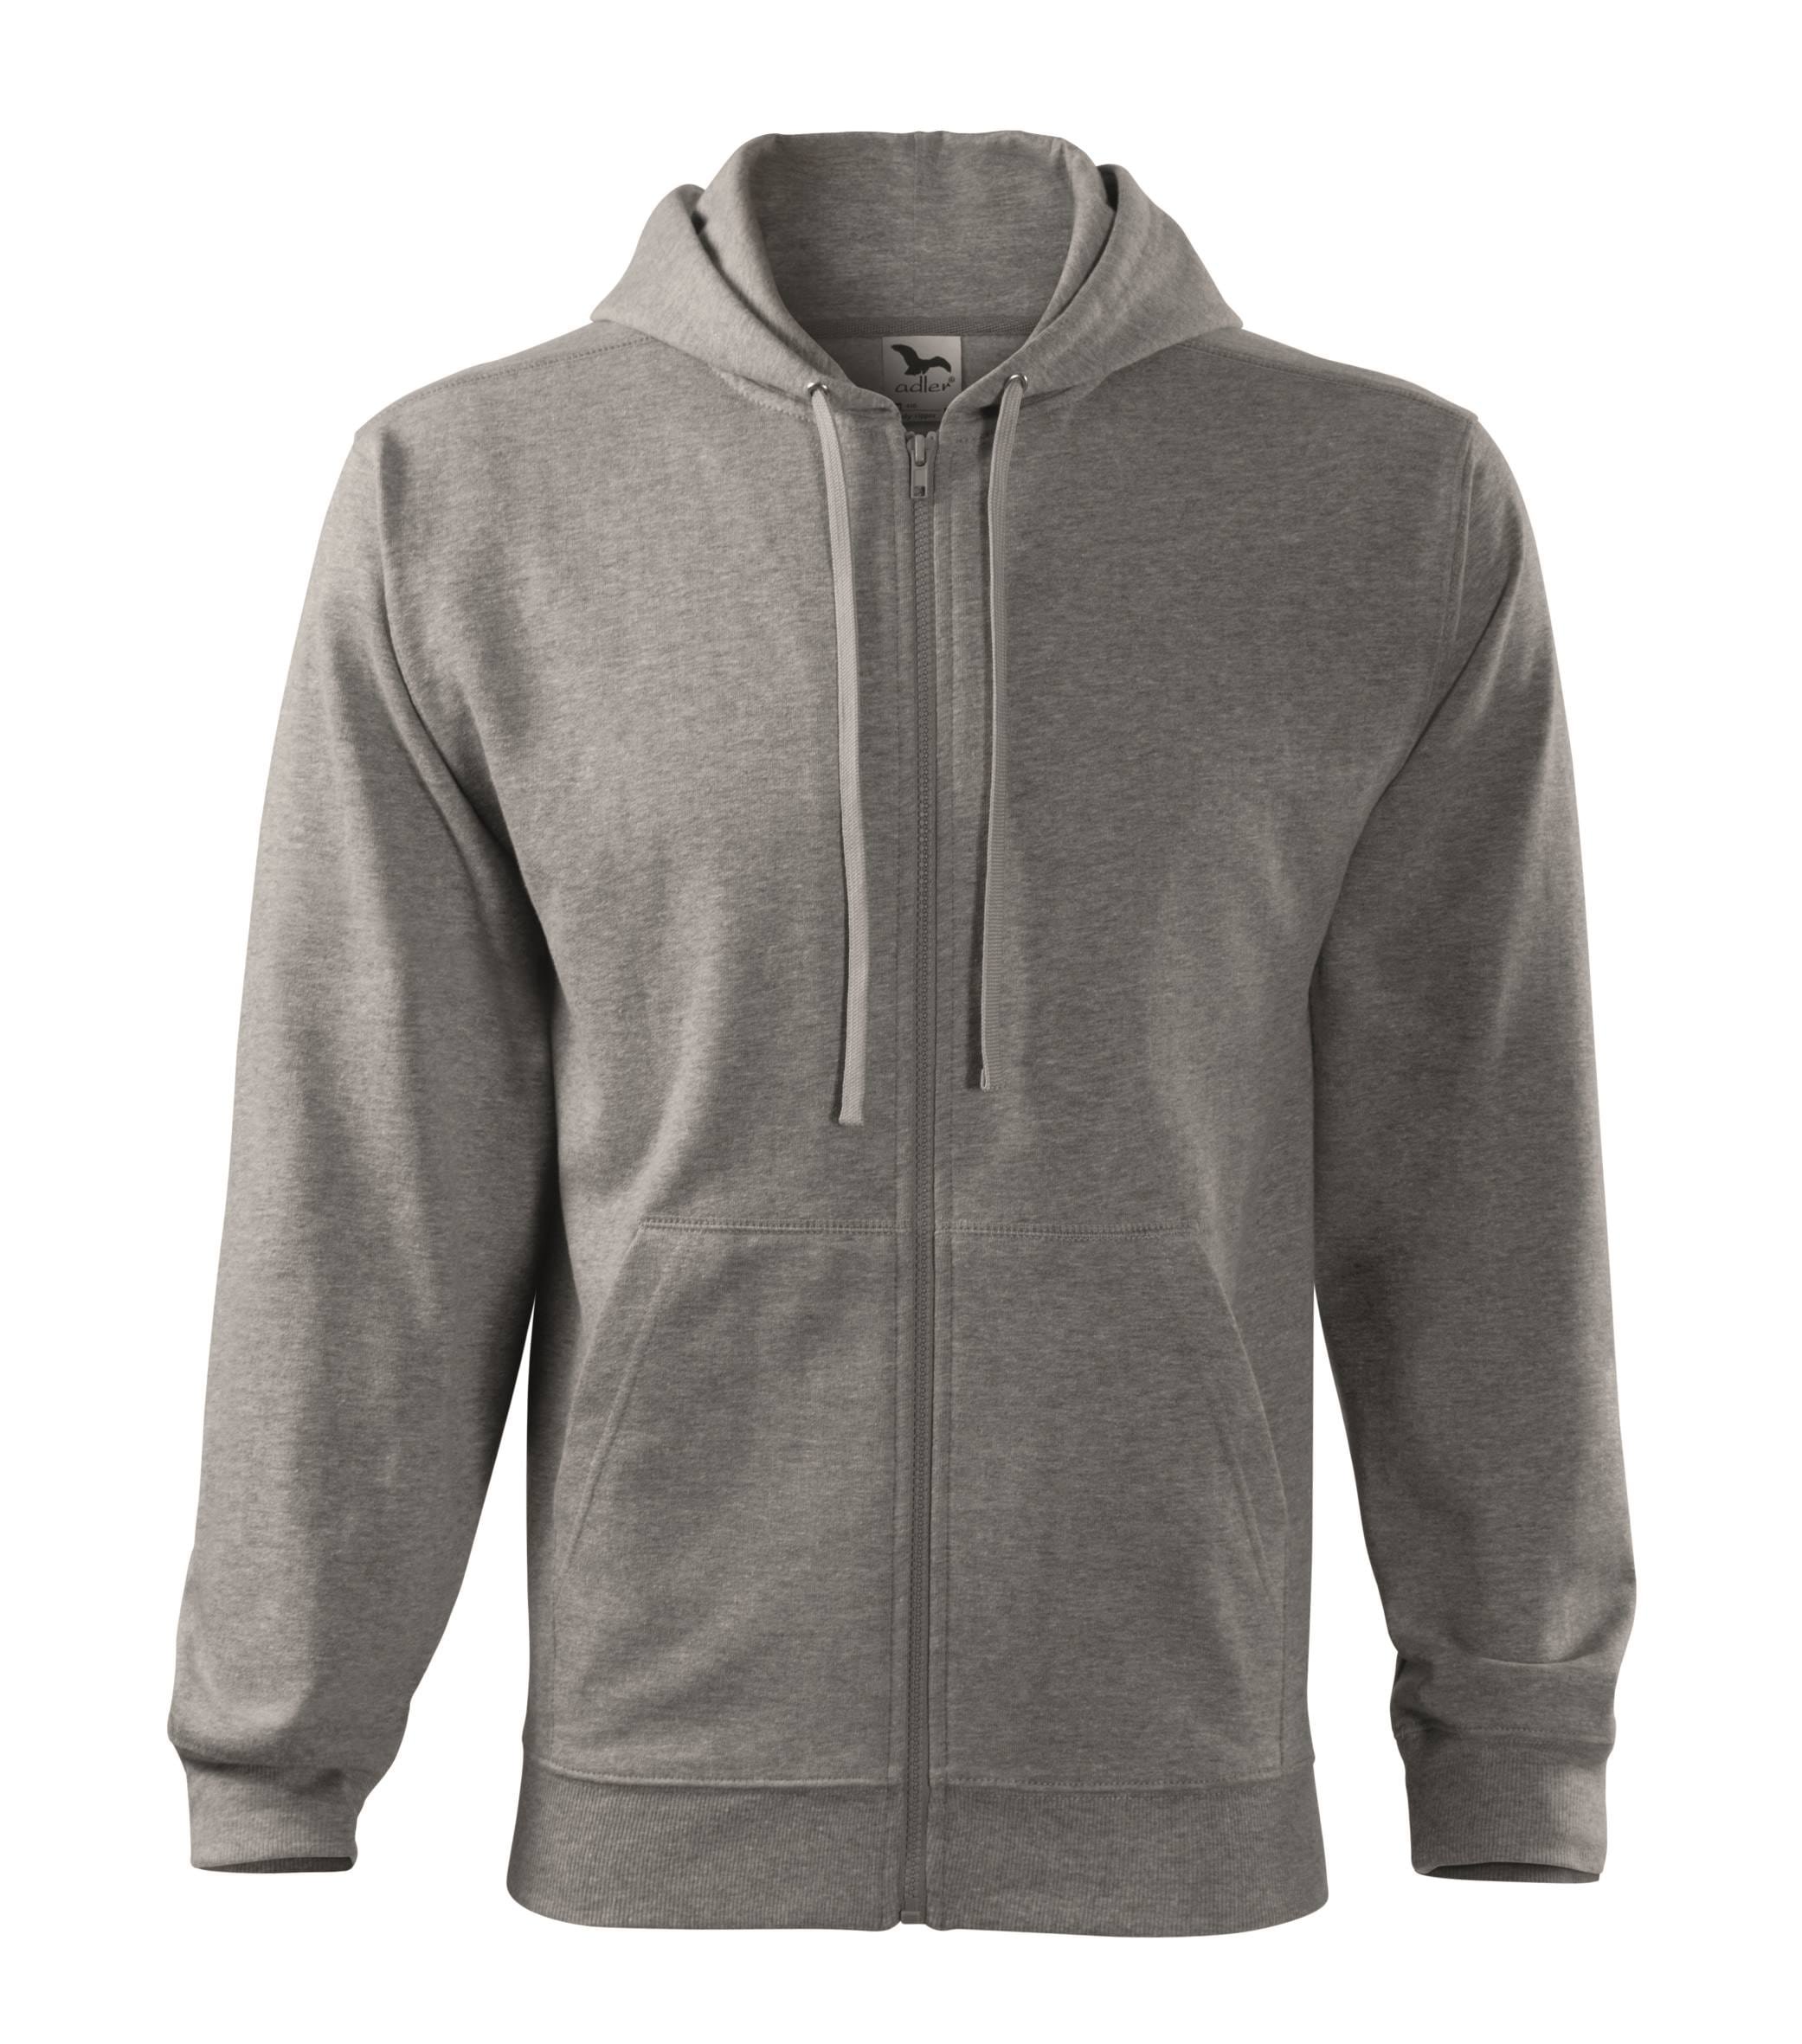 Custom Embroidered/Printed Zipped Premium Sweatshirt, grey malange, www.ontimeprint.co.uk